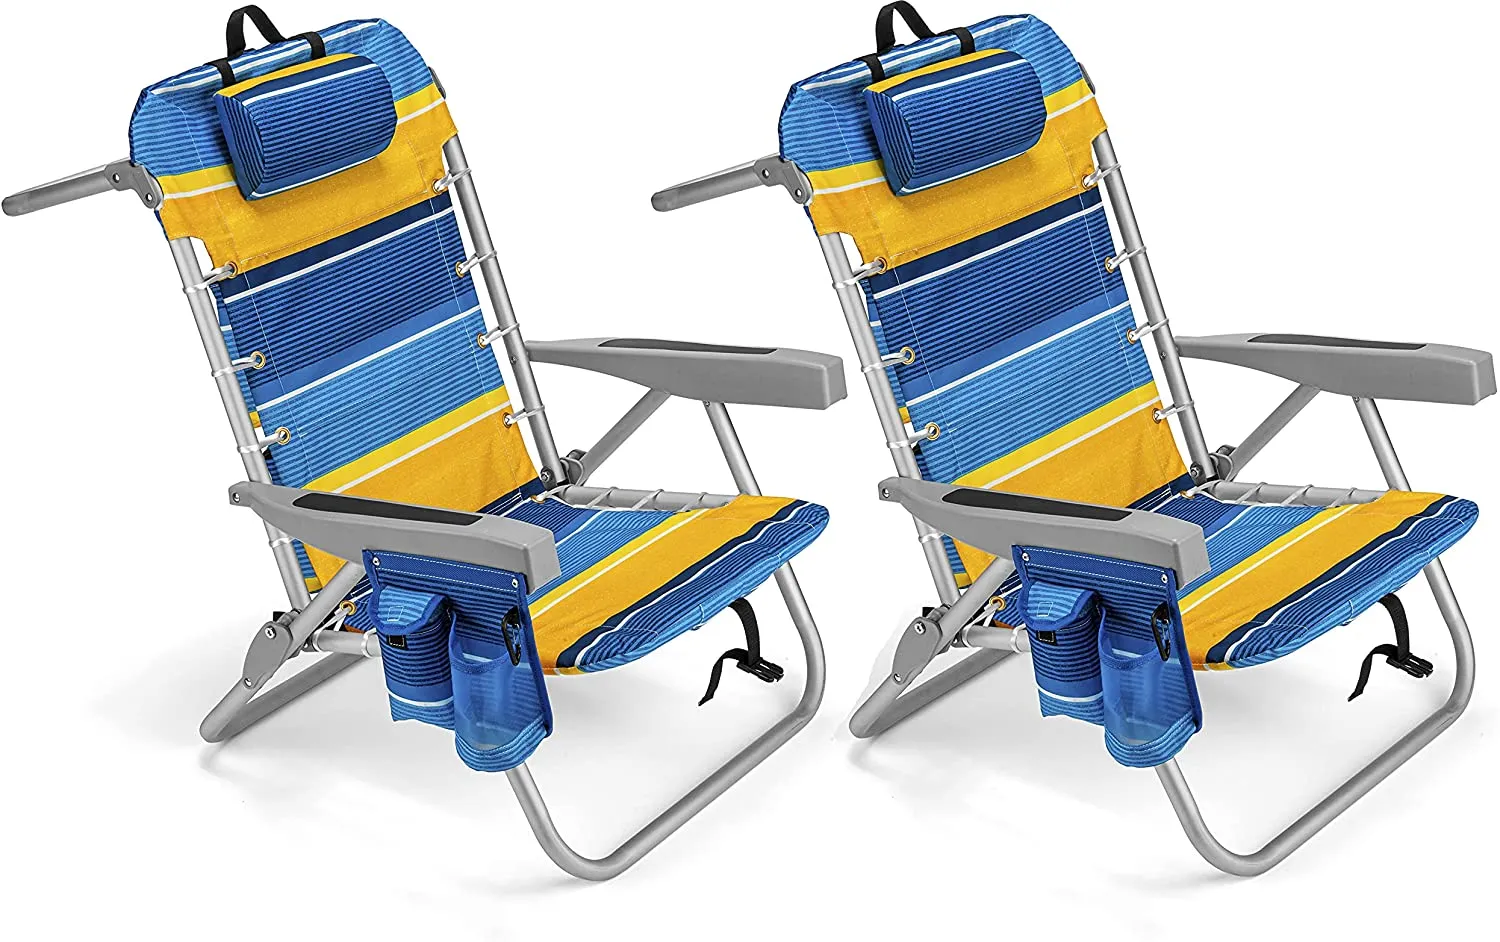 Homevative Folding Backpack Beach Chair